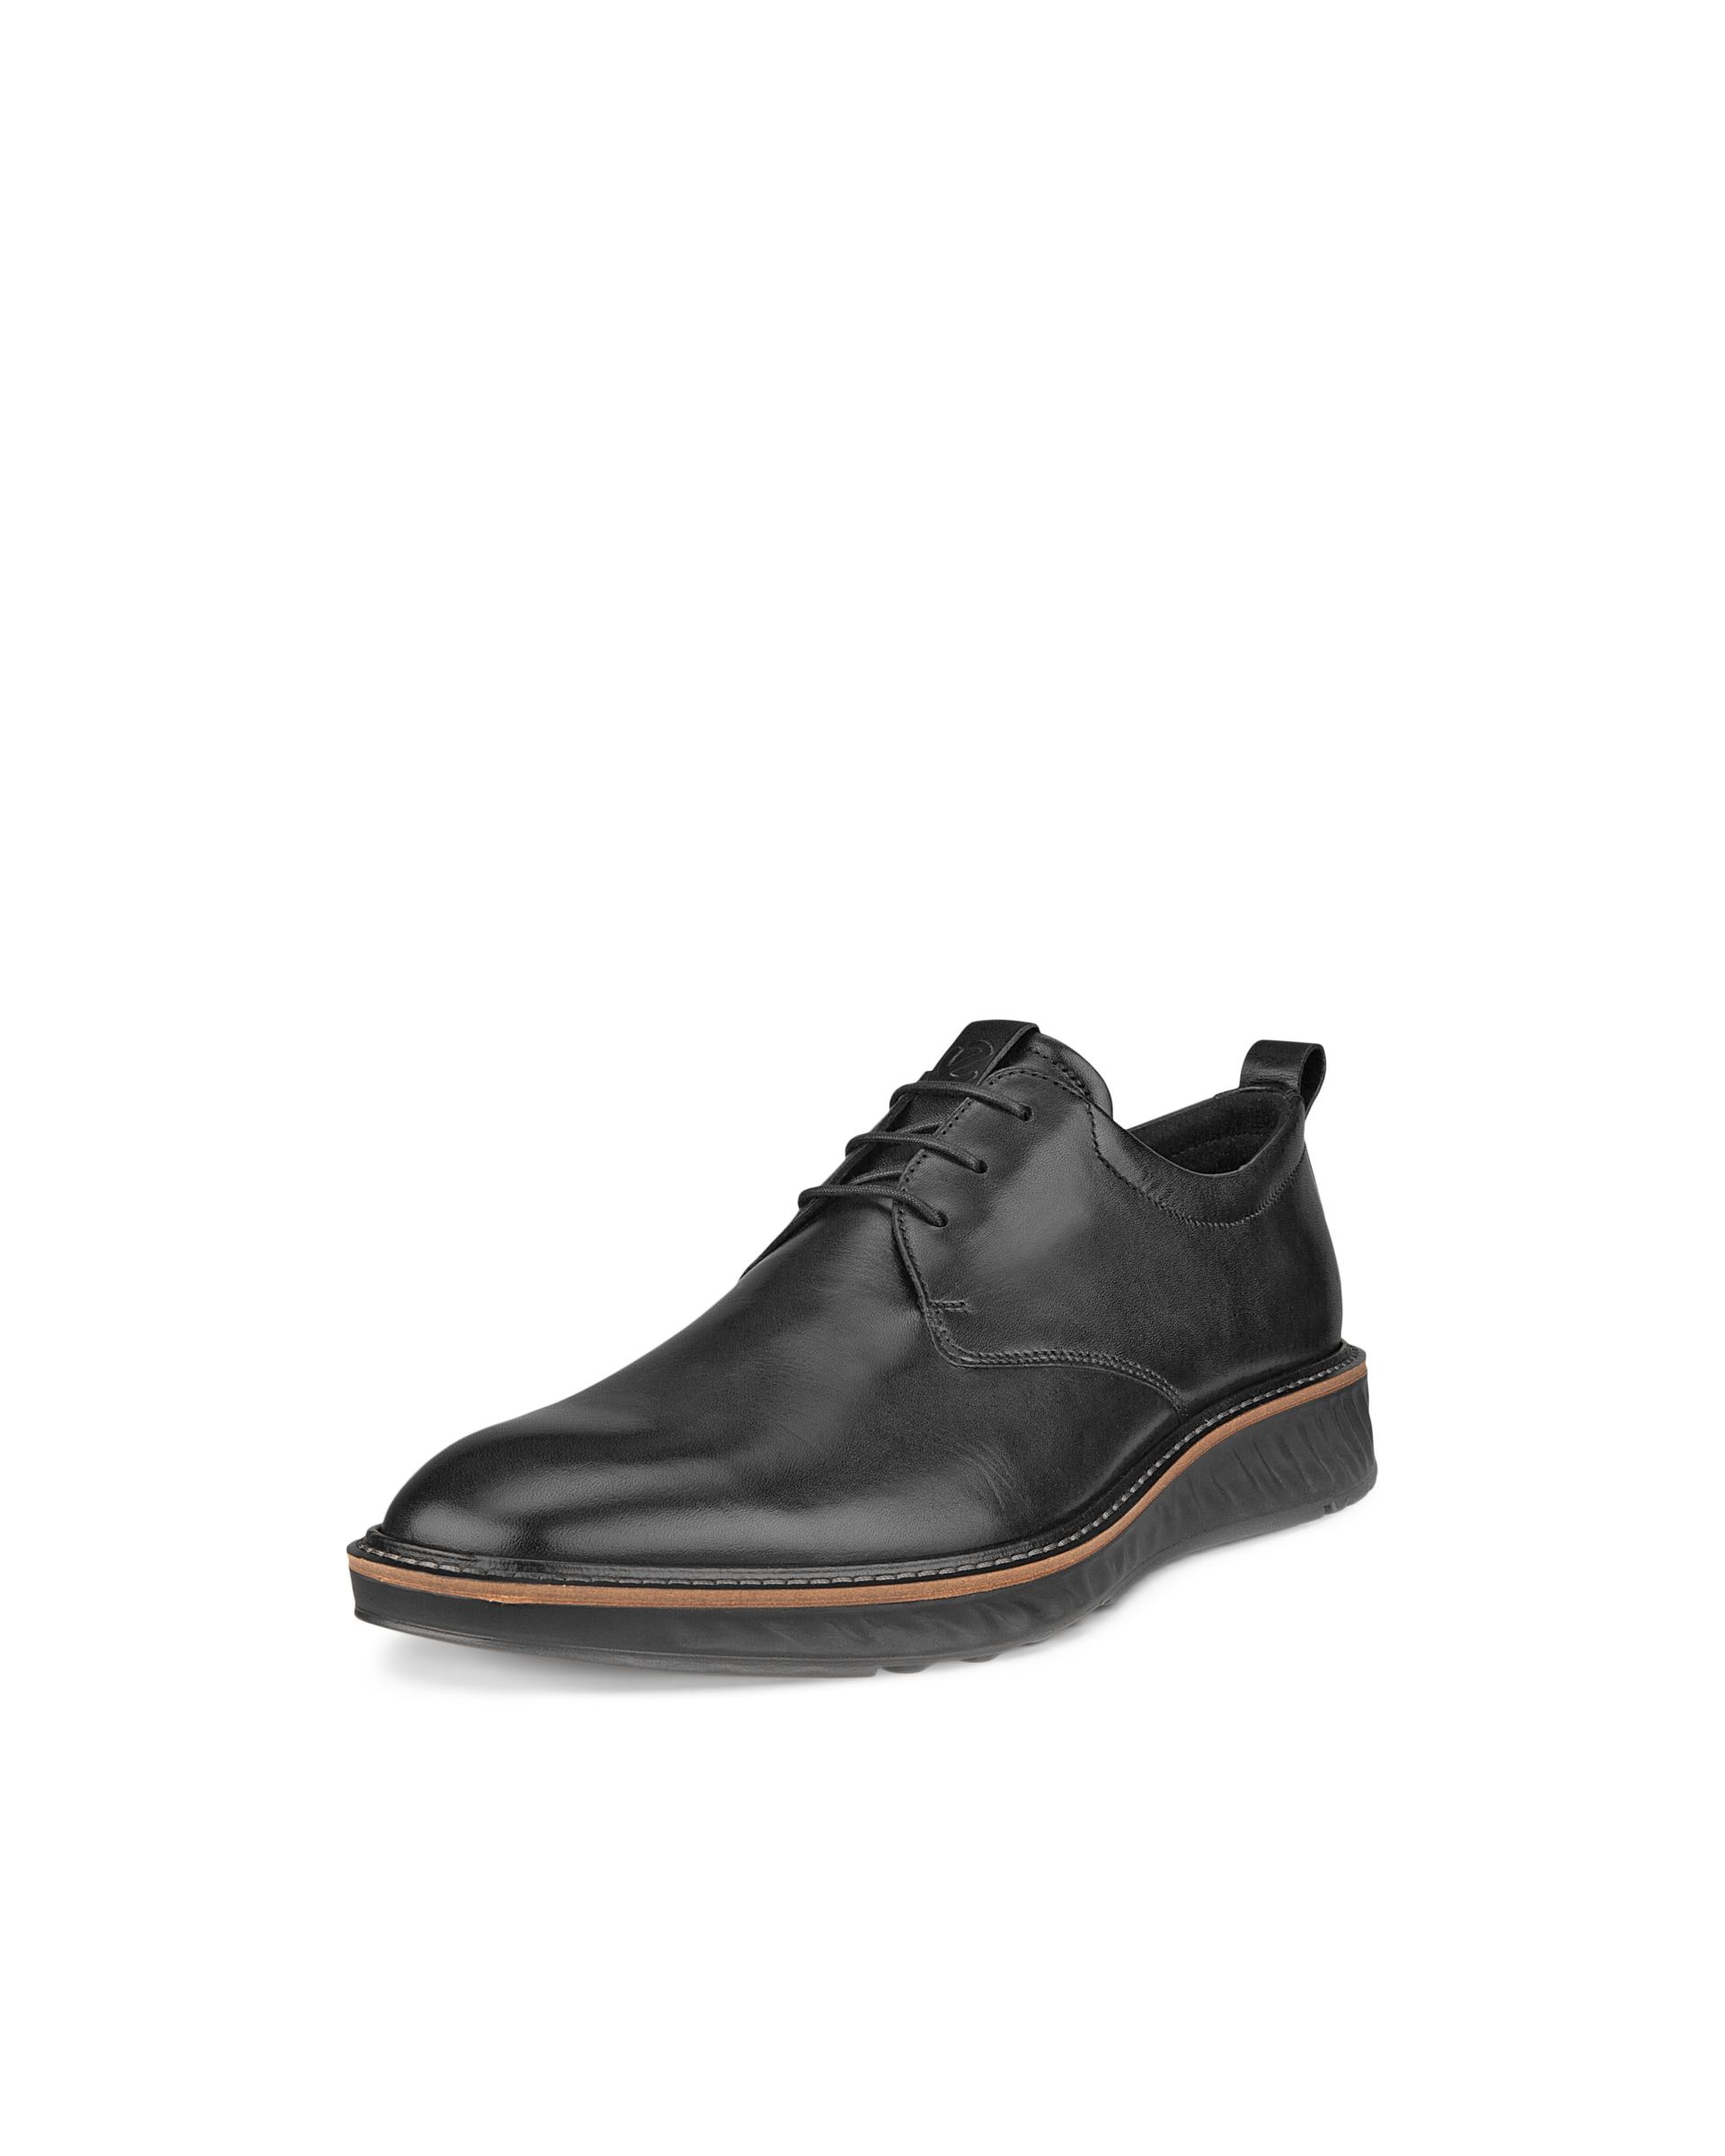 Ecco Men's S Lite Hybrid Apron Toe Leather Derby Shoe in Black